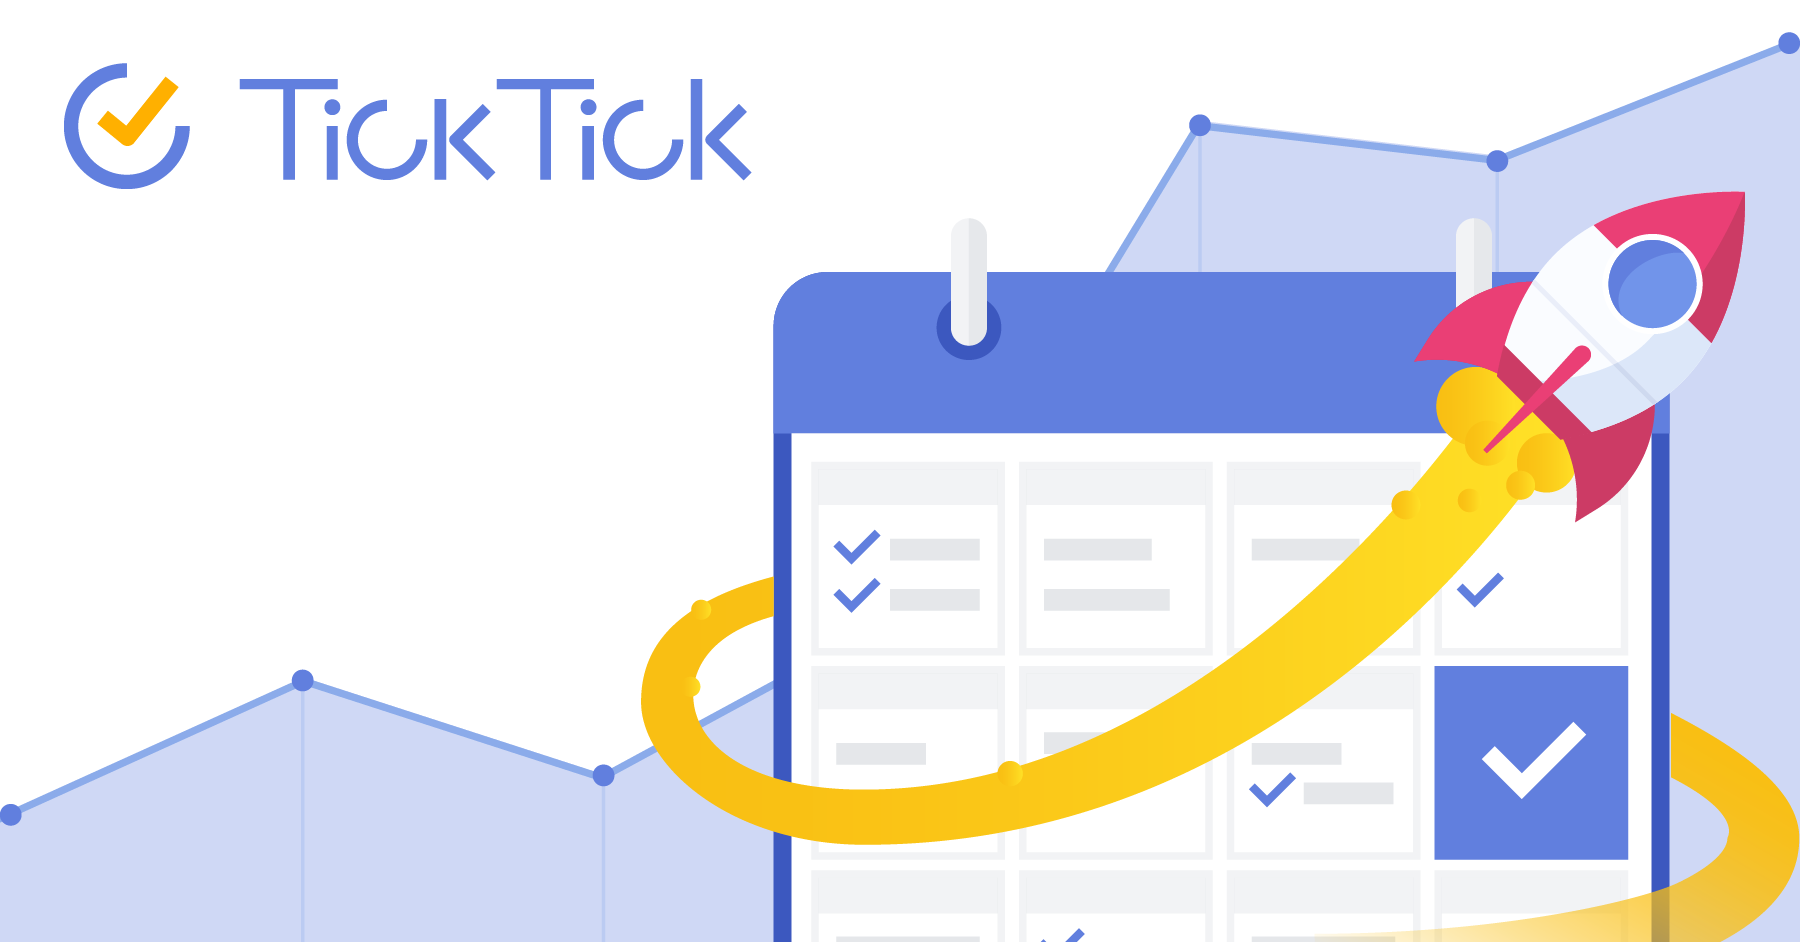 TickTick application main poster